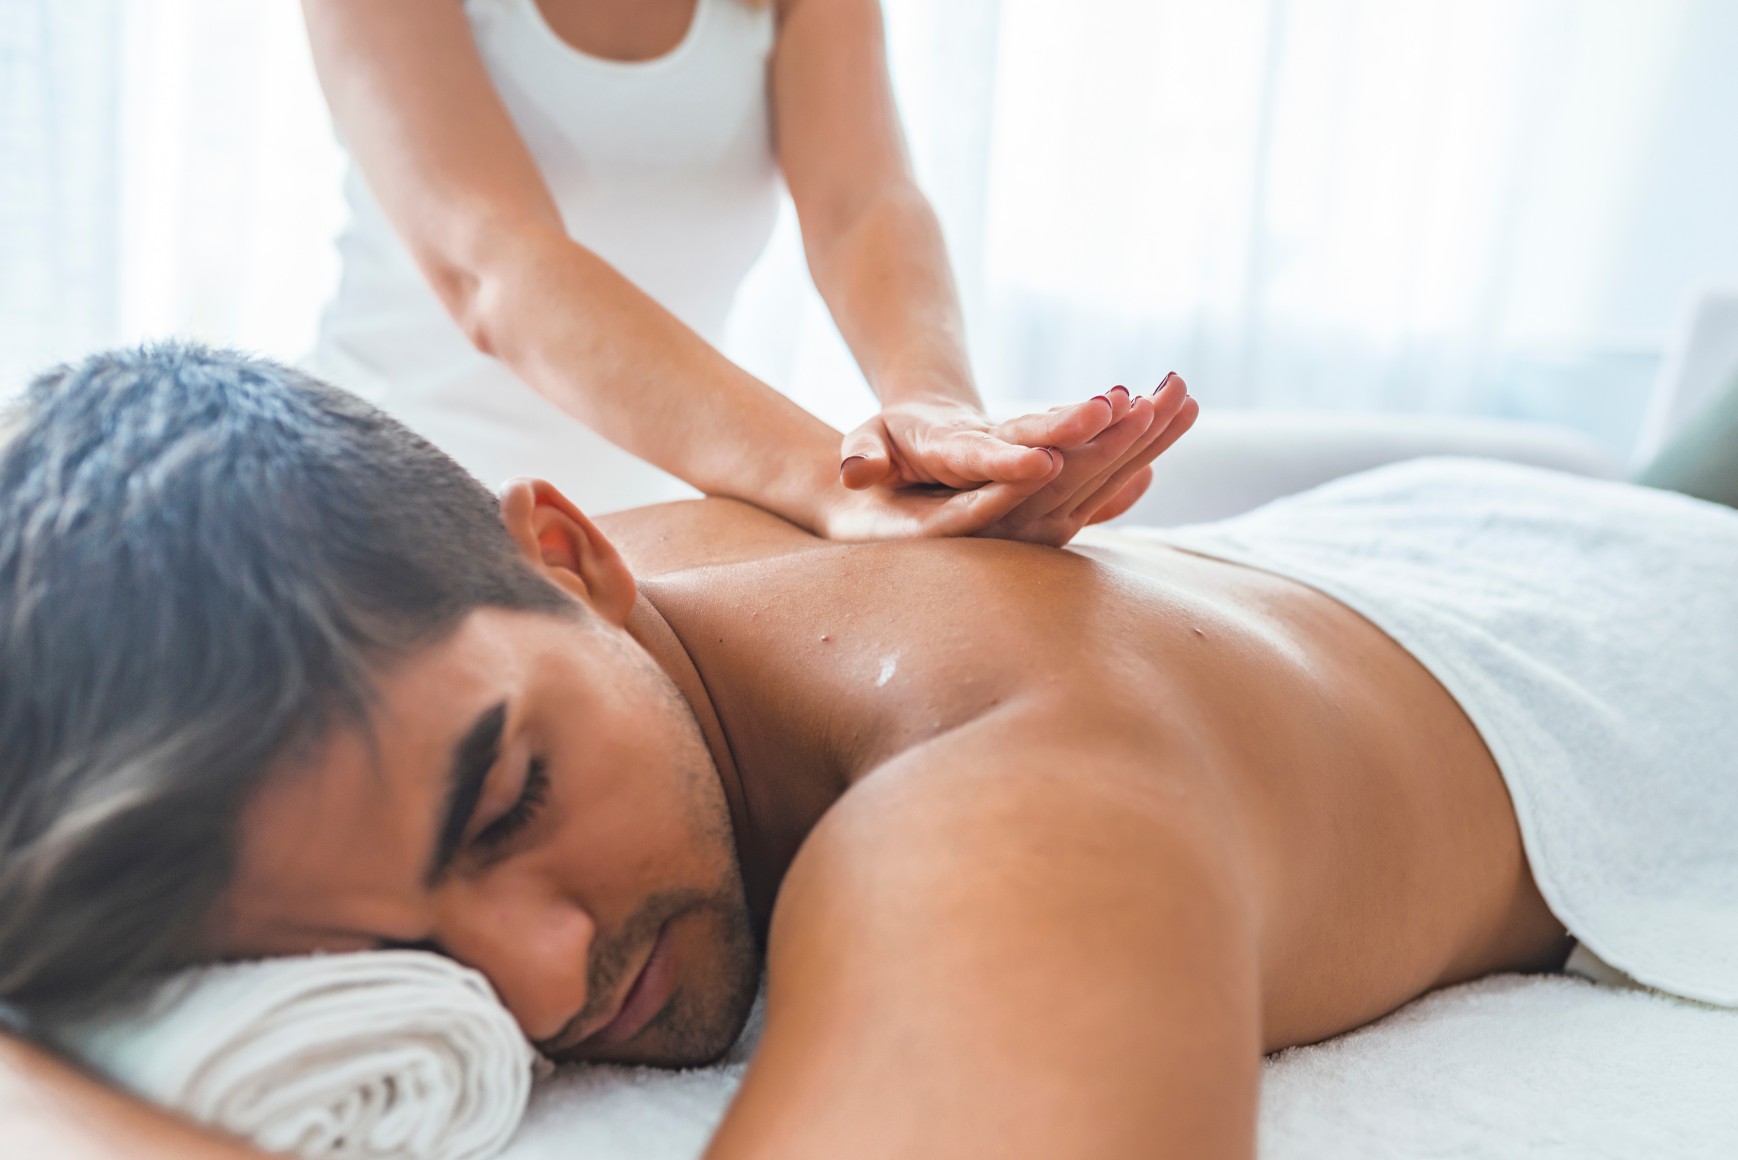 Young man is enjoying massage on spa treatment. Man having a massage in a wellness center. Handsome man receiving back massage in spa salon. Man relaxing in a wellness center